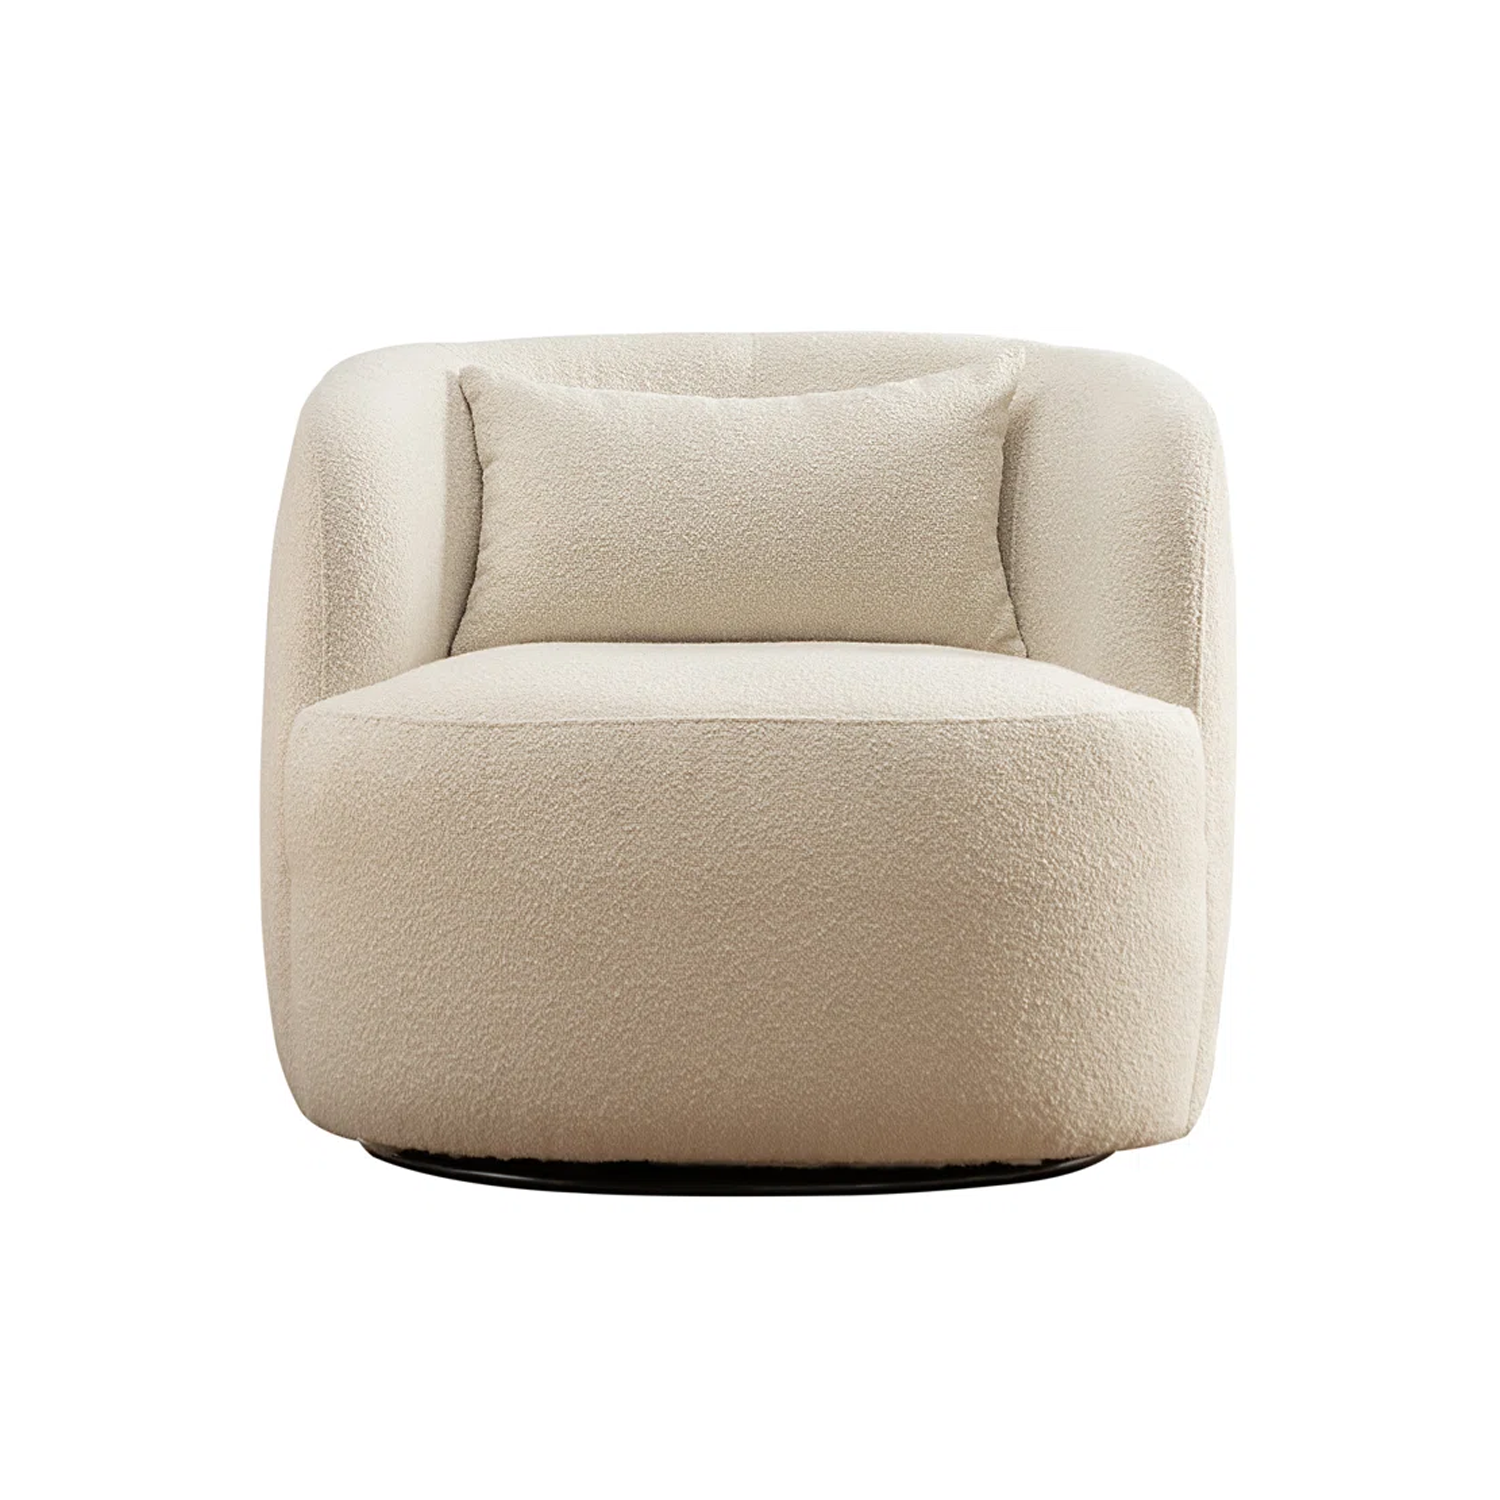 orren ellis wide upholstered boucle chair wayfair